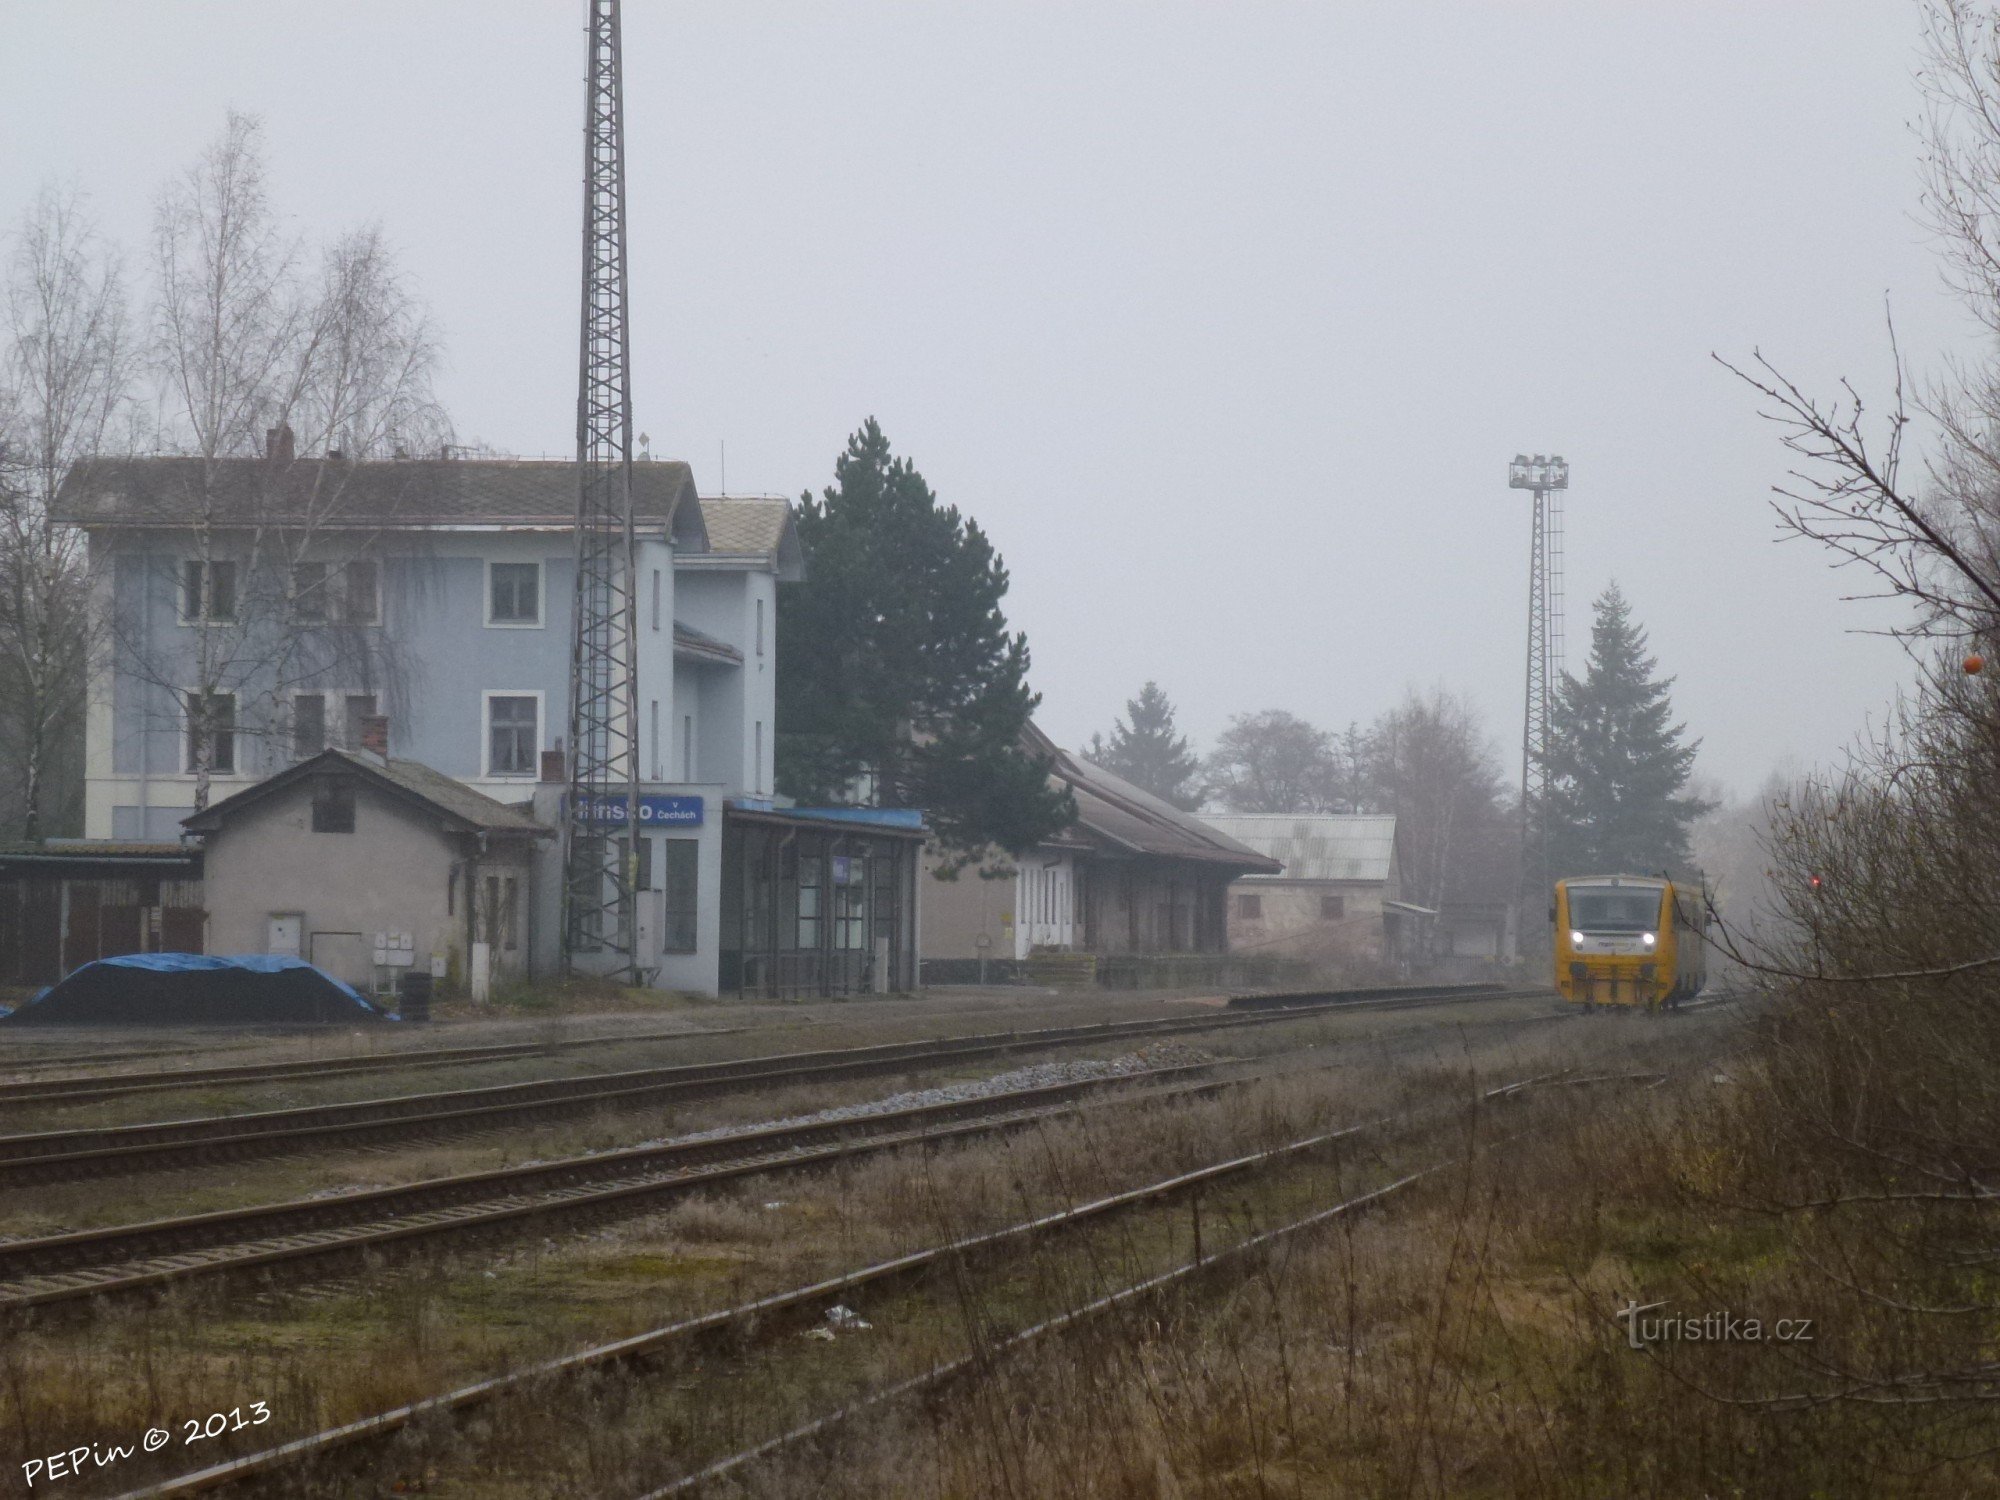 Hlinsko στη Βοημία, σιδηροδρομικός σταθμός, αυλή τροχιάς